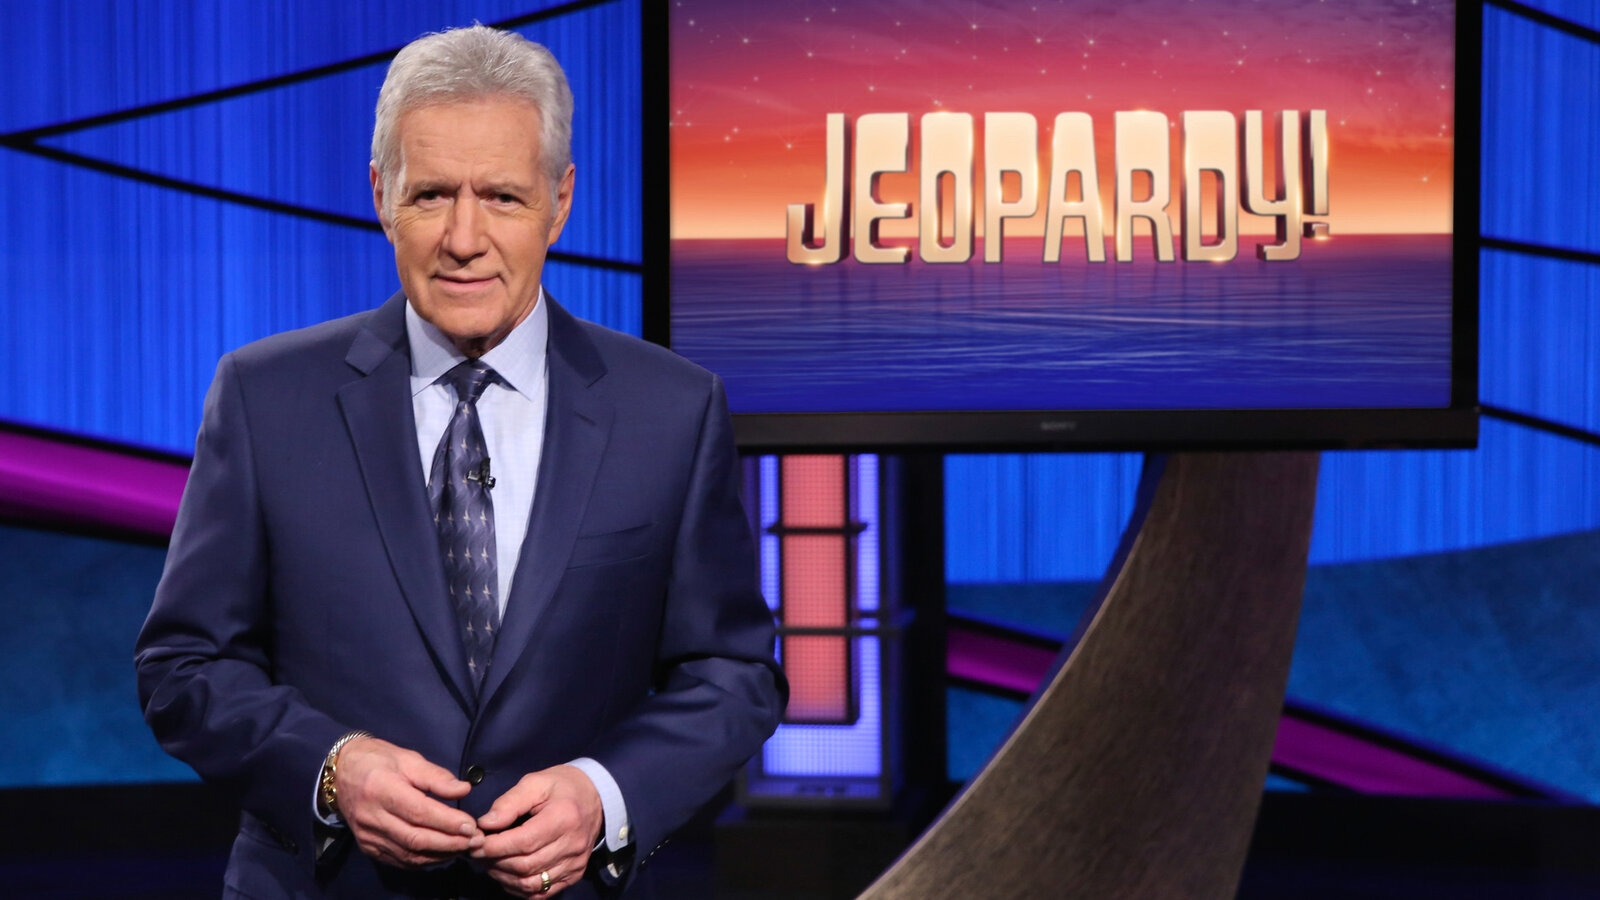 Alex Trebek Host of beloved Jeopardy TV Quiz Show